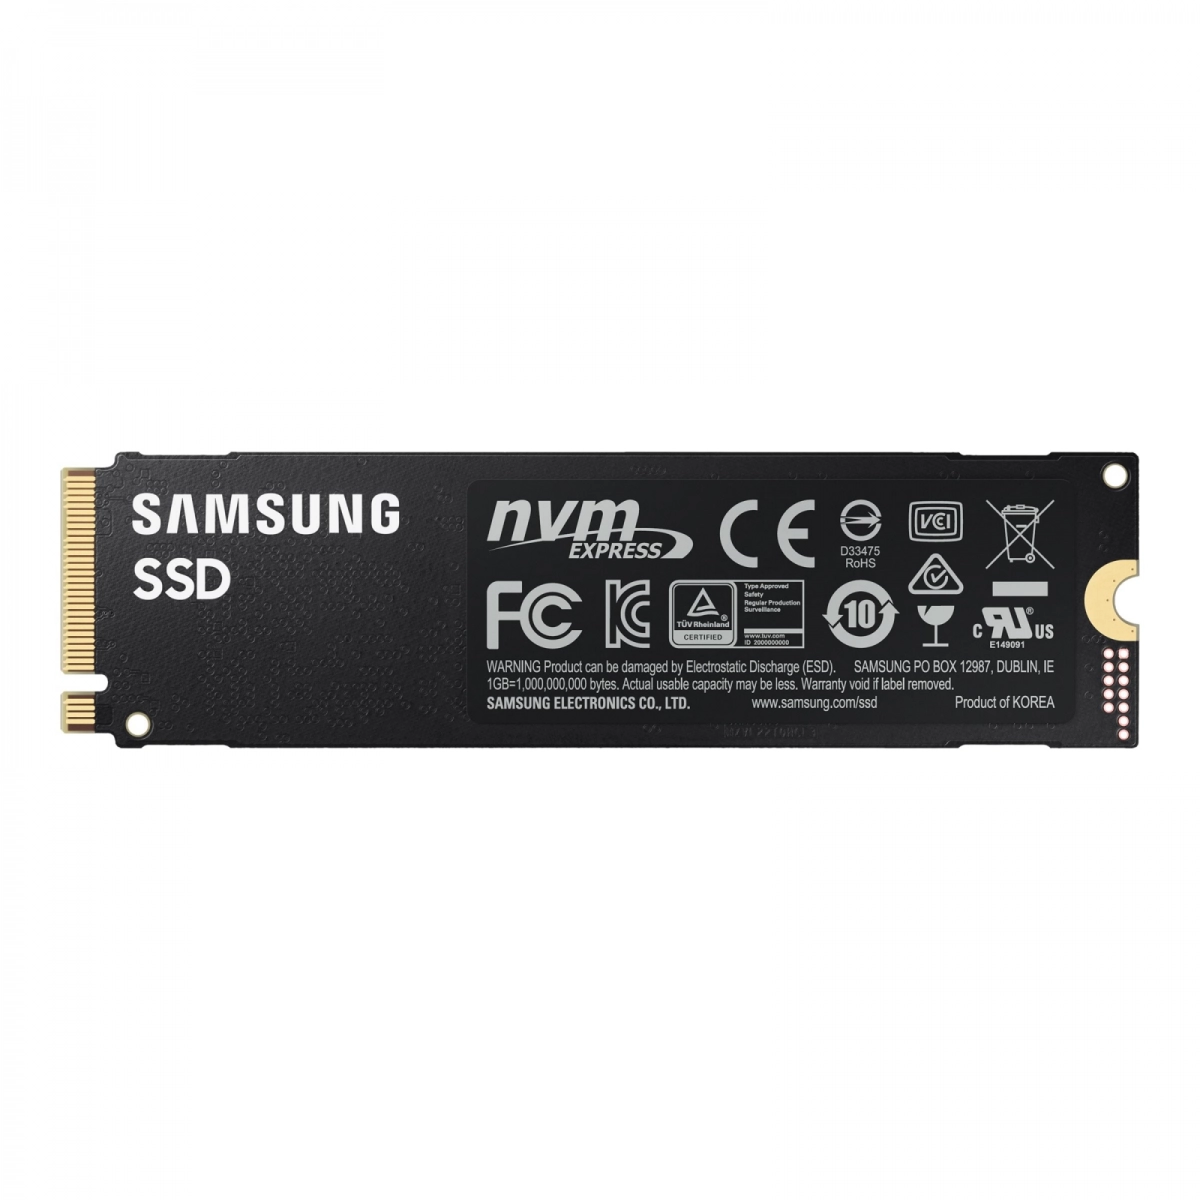 Samsung 980 Pro SSD 1TB PCIe 4.0 x4 NVMe M.2 (MZ-V8P1T0BW)